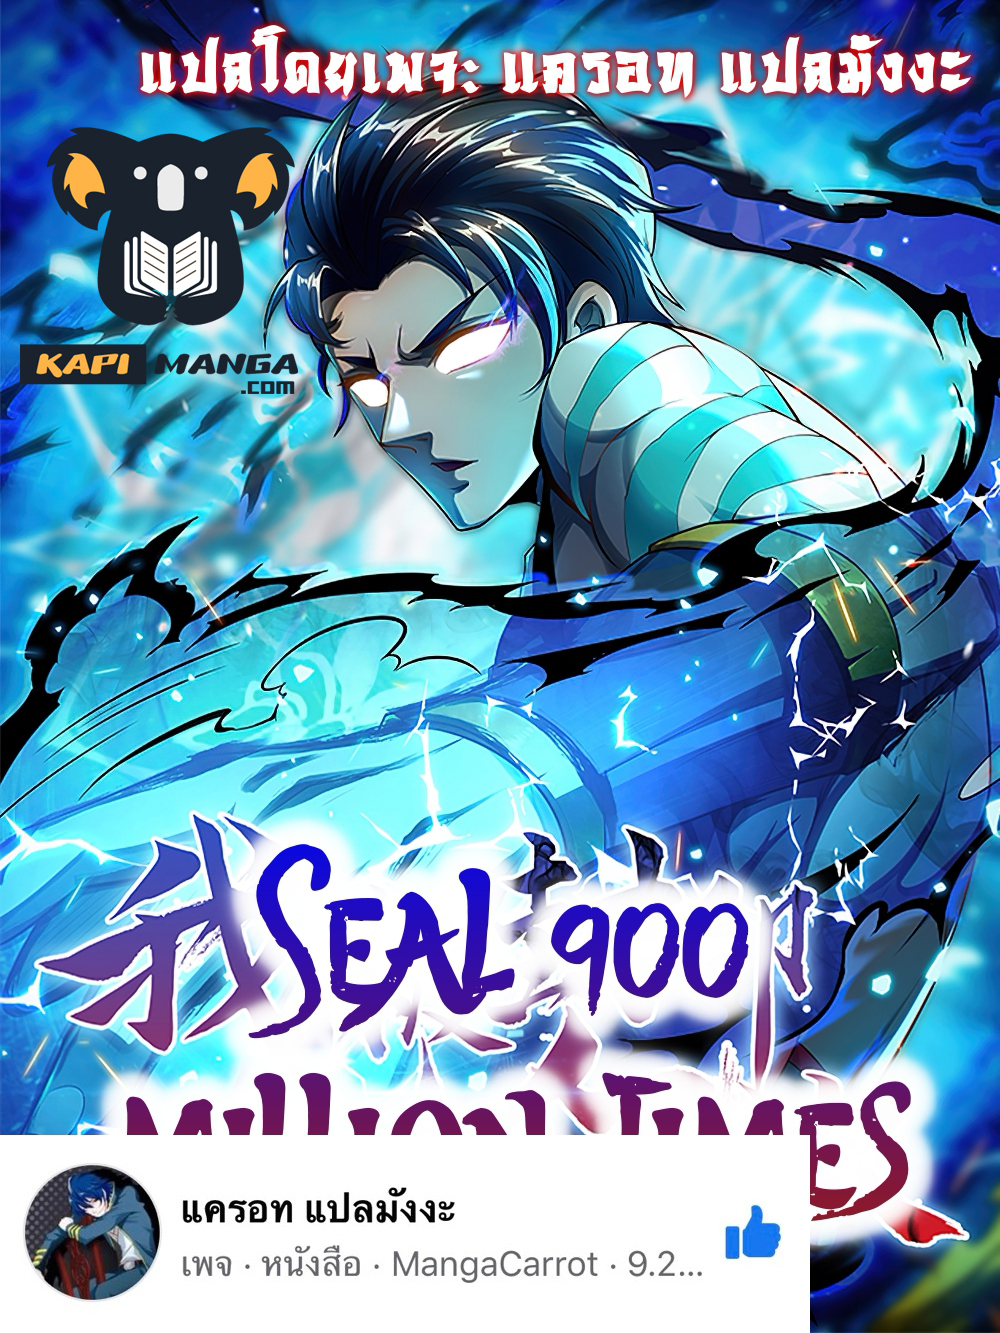 Seal 900 Million Times 25 (1)